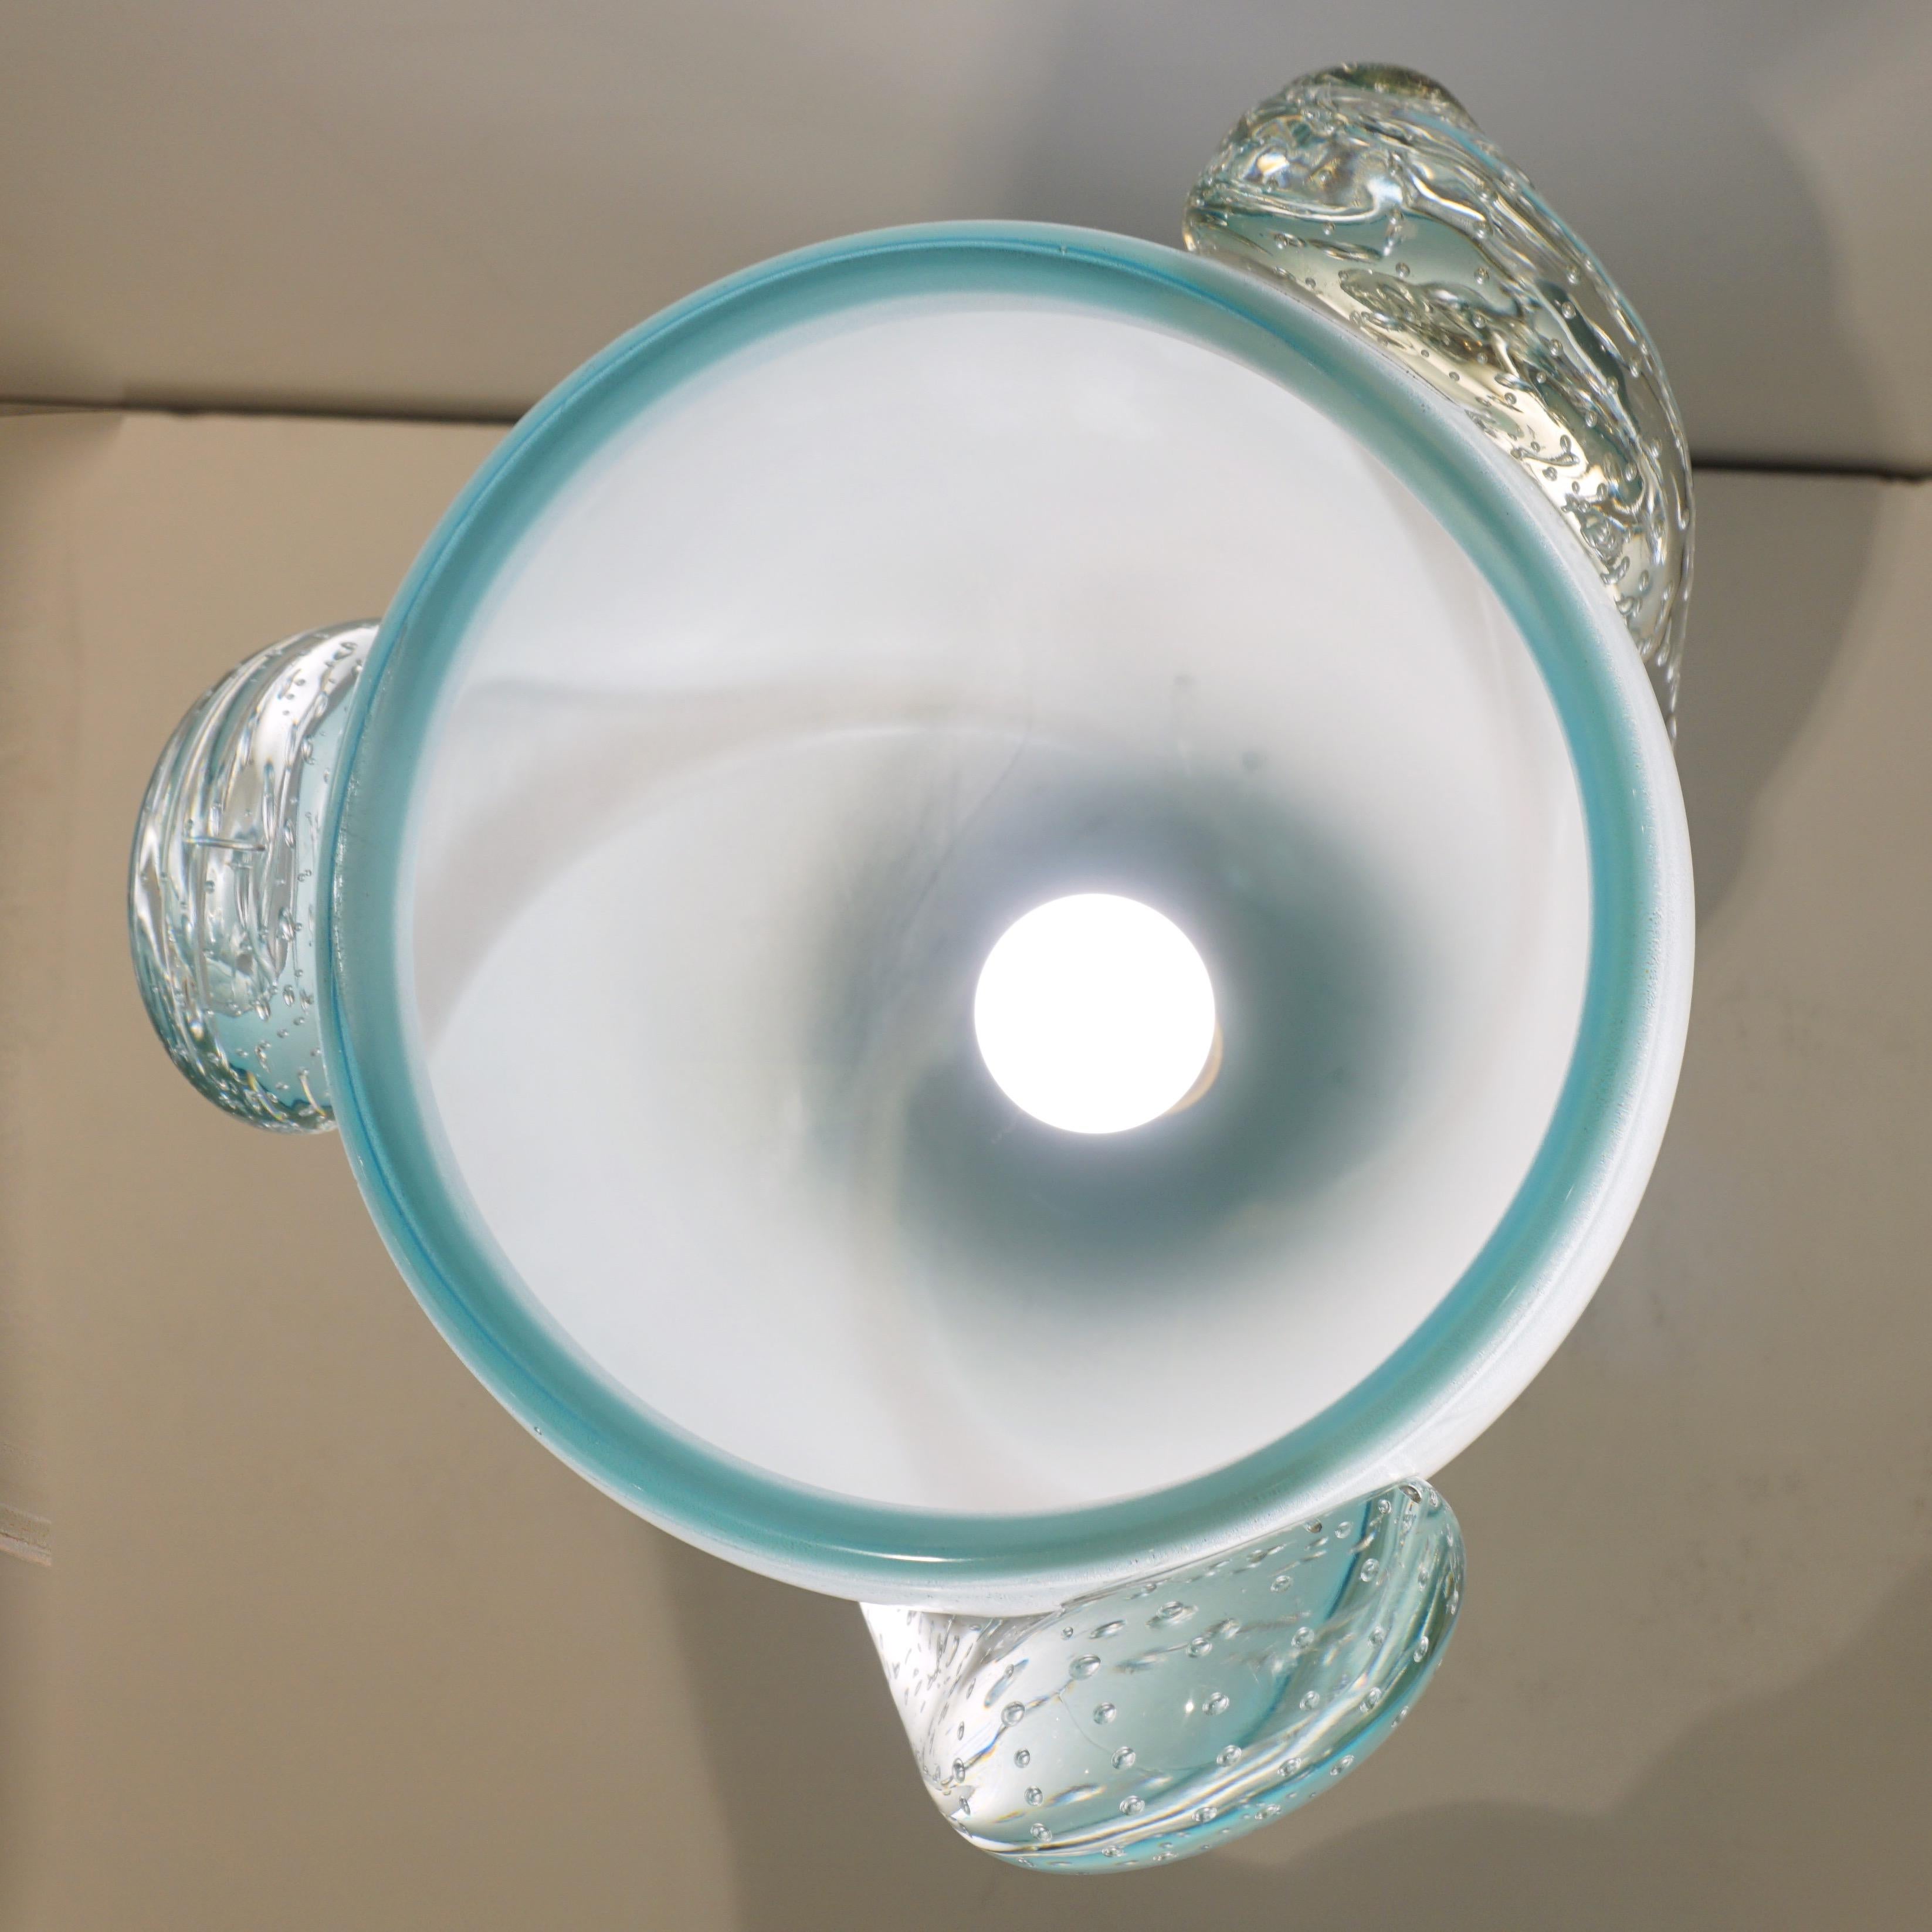 Barovier Toso Lampe organique en verre de Murano bleu aqua, contemporaine et moderne italienne en vente 6